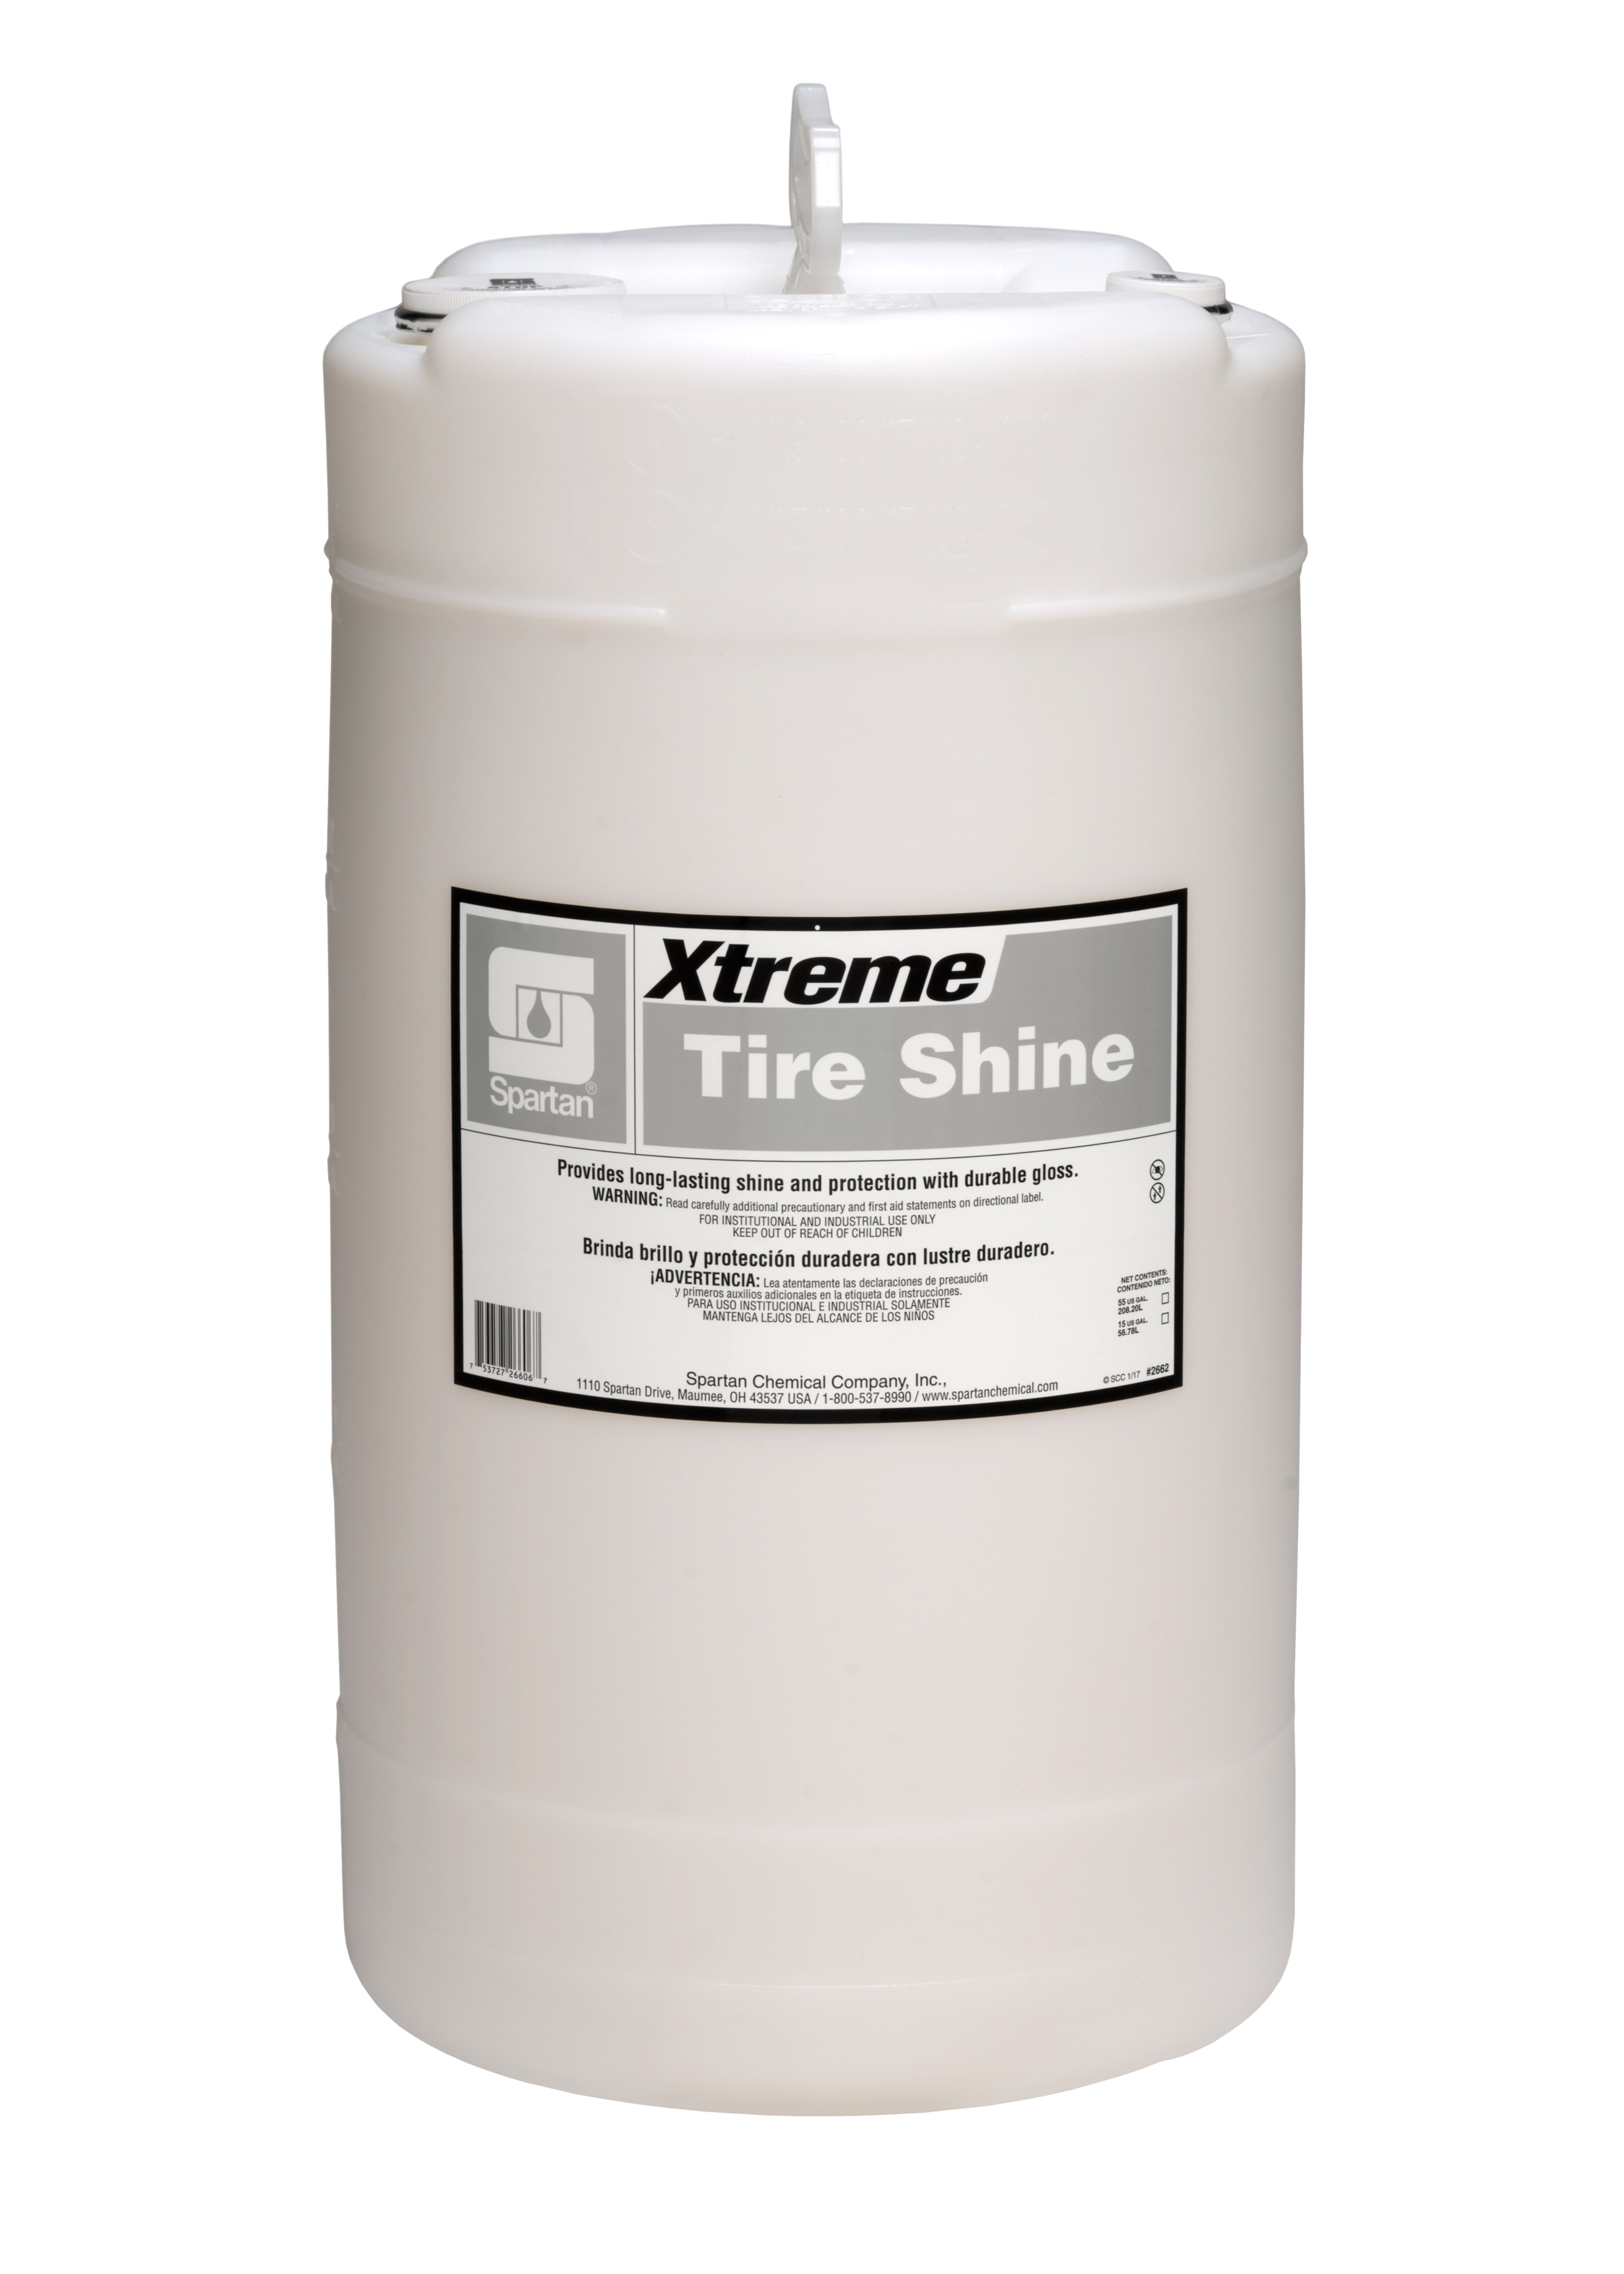 Spartan Chemical Company Xtreme Tire Shine, 15 GAL DRUM